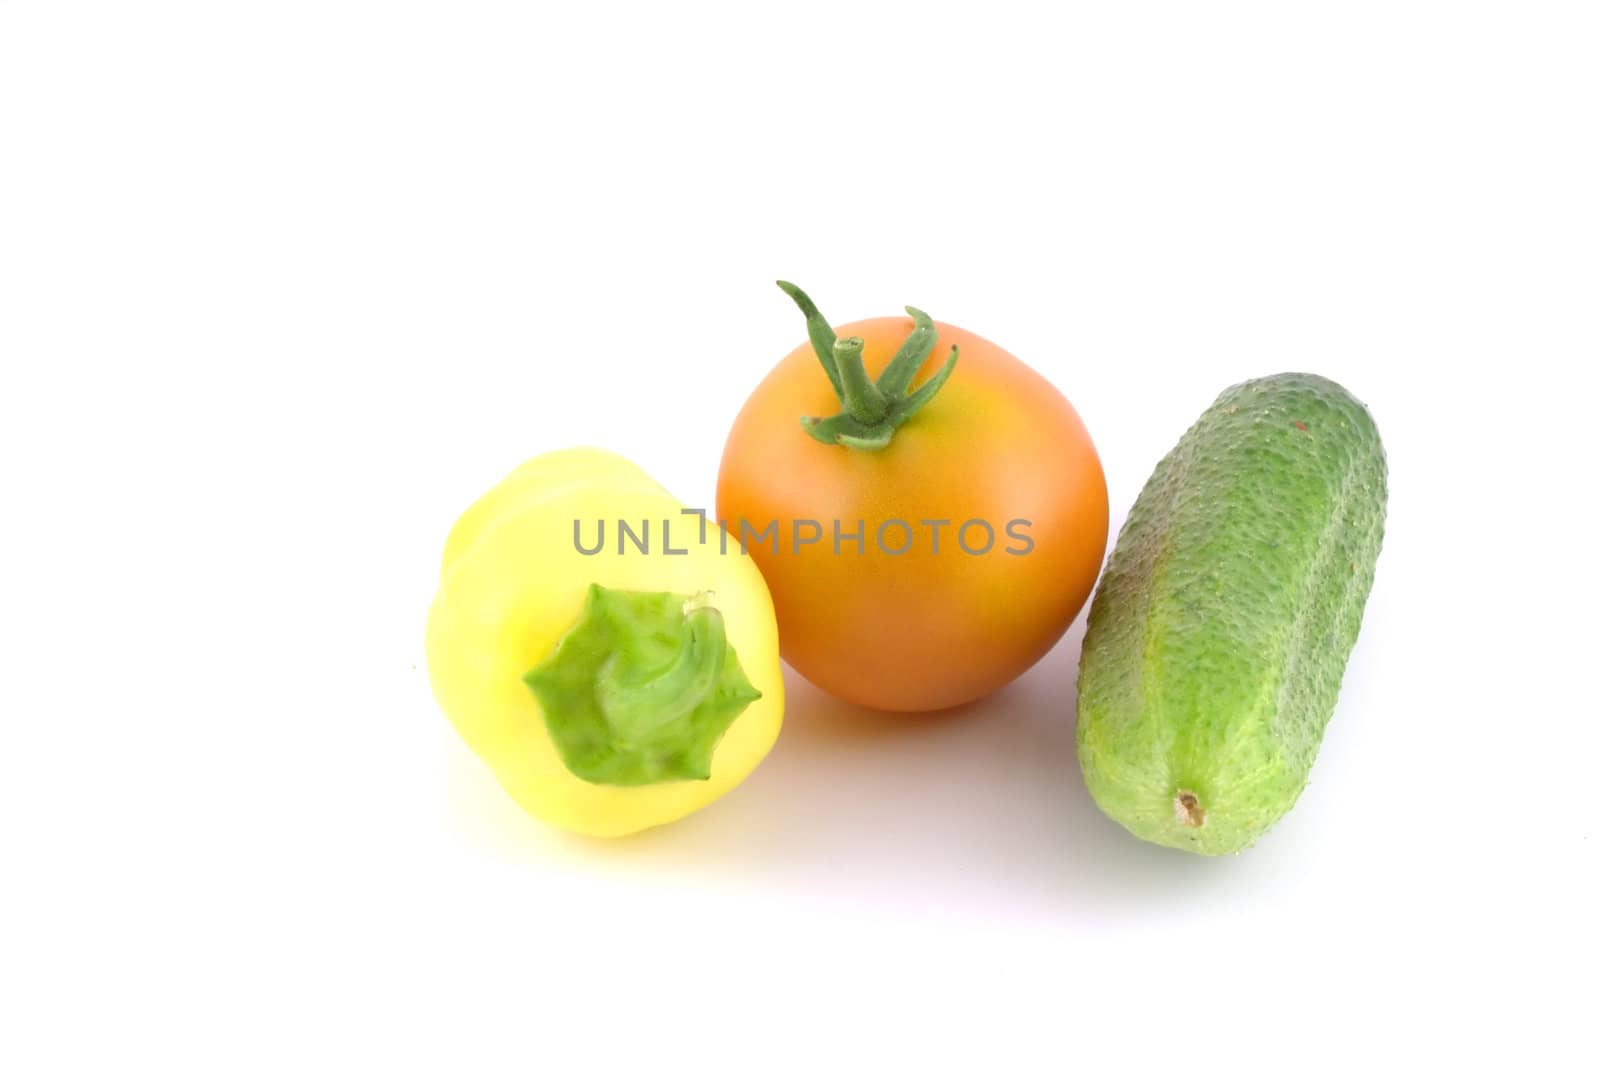 Cucumber, tomato and pepper over white